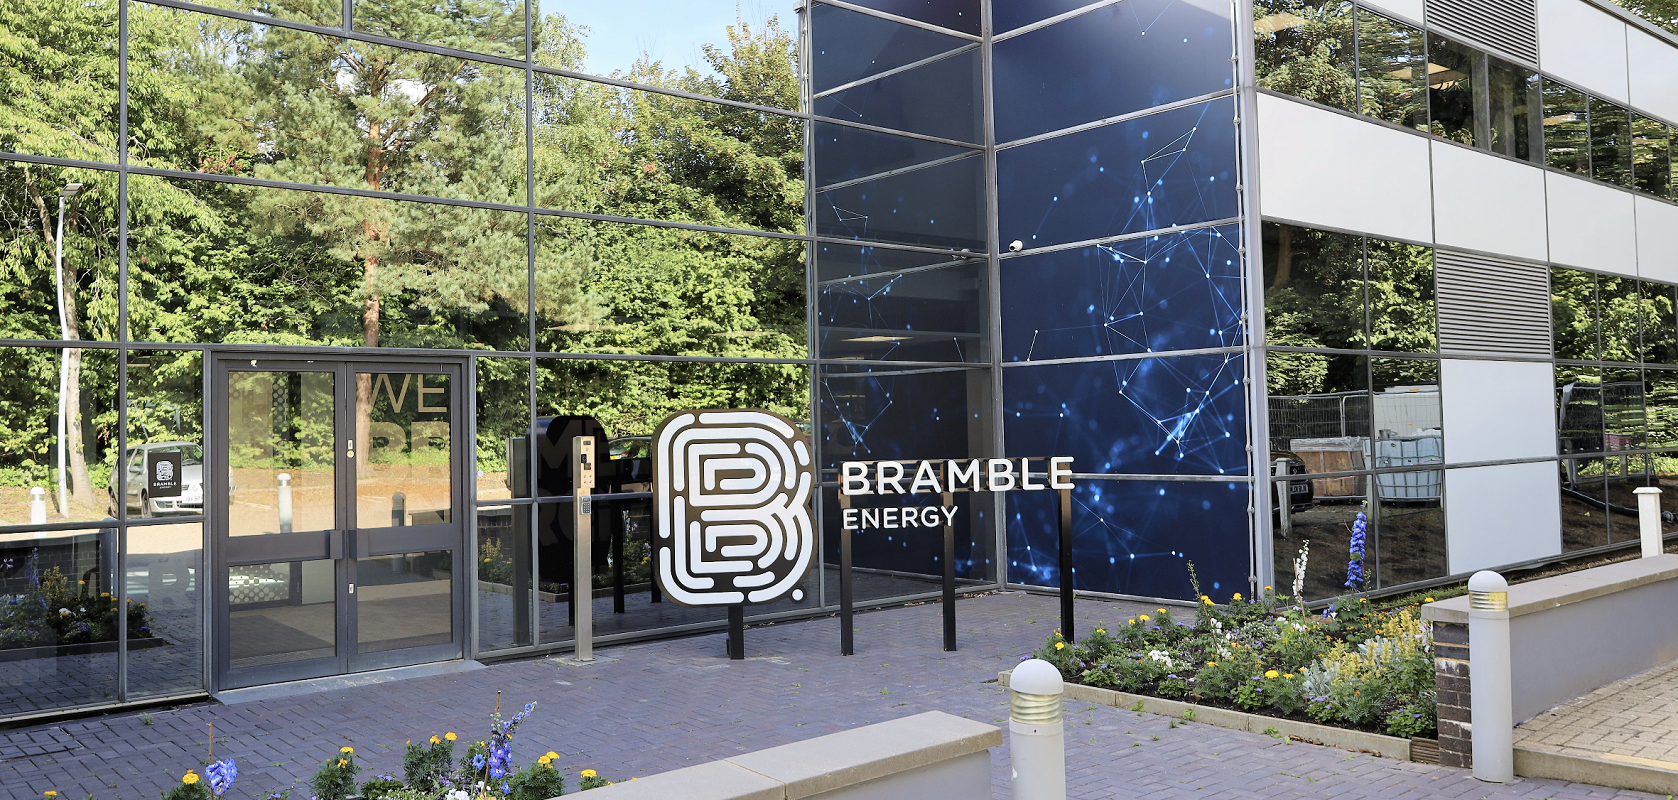 Fuel cell technology - Bramble Energy -Atrium Court - Source- Bramble Energy